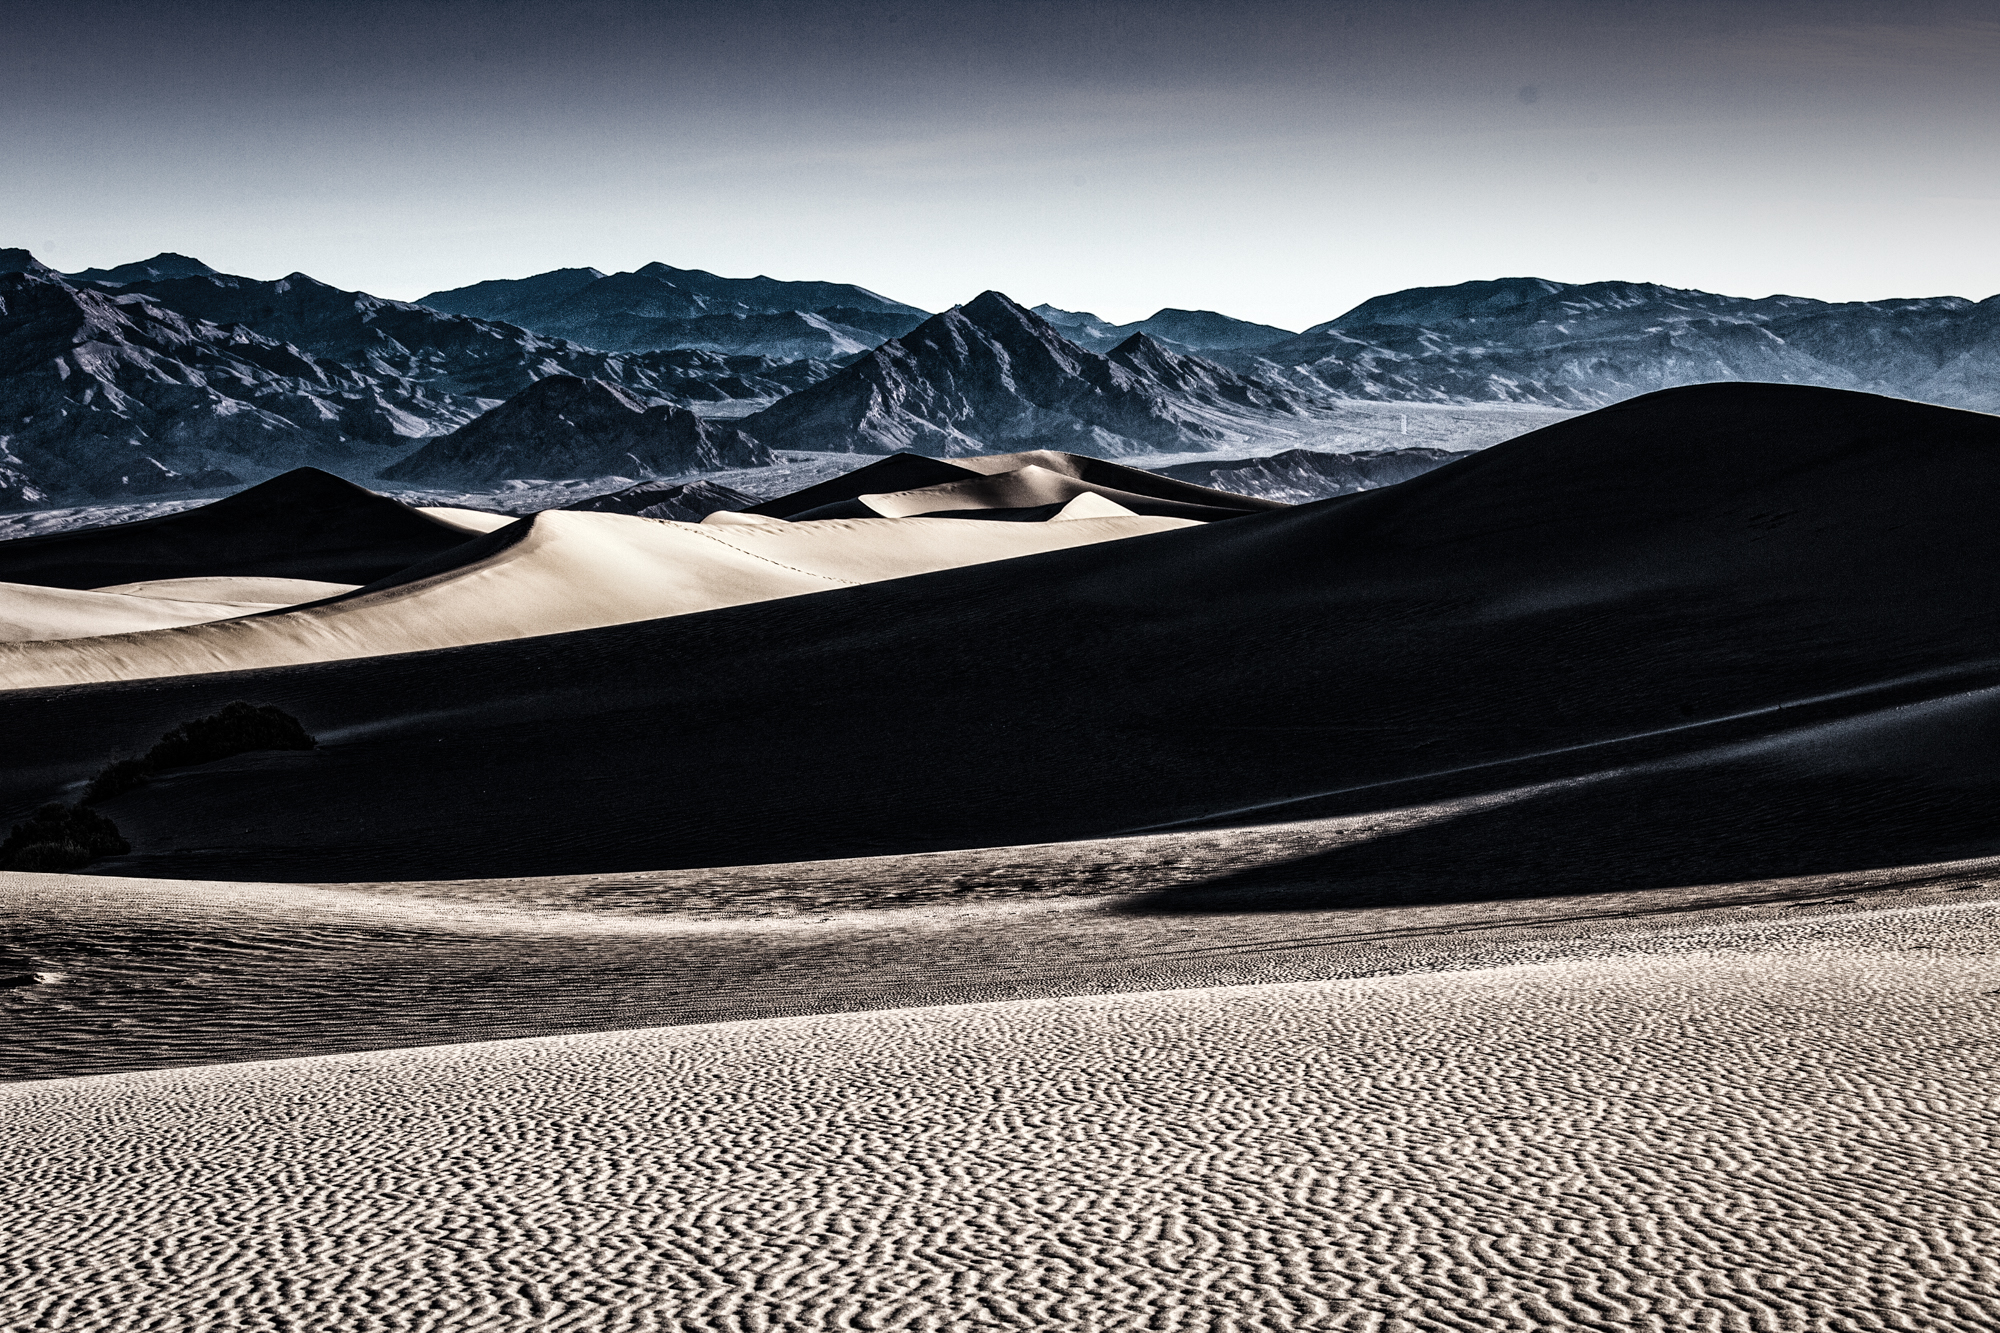 Death Valley at dawn. Death Valley, California